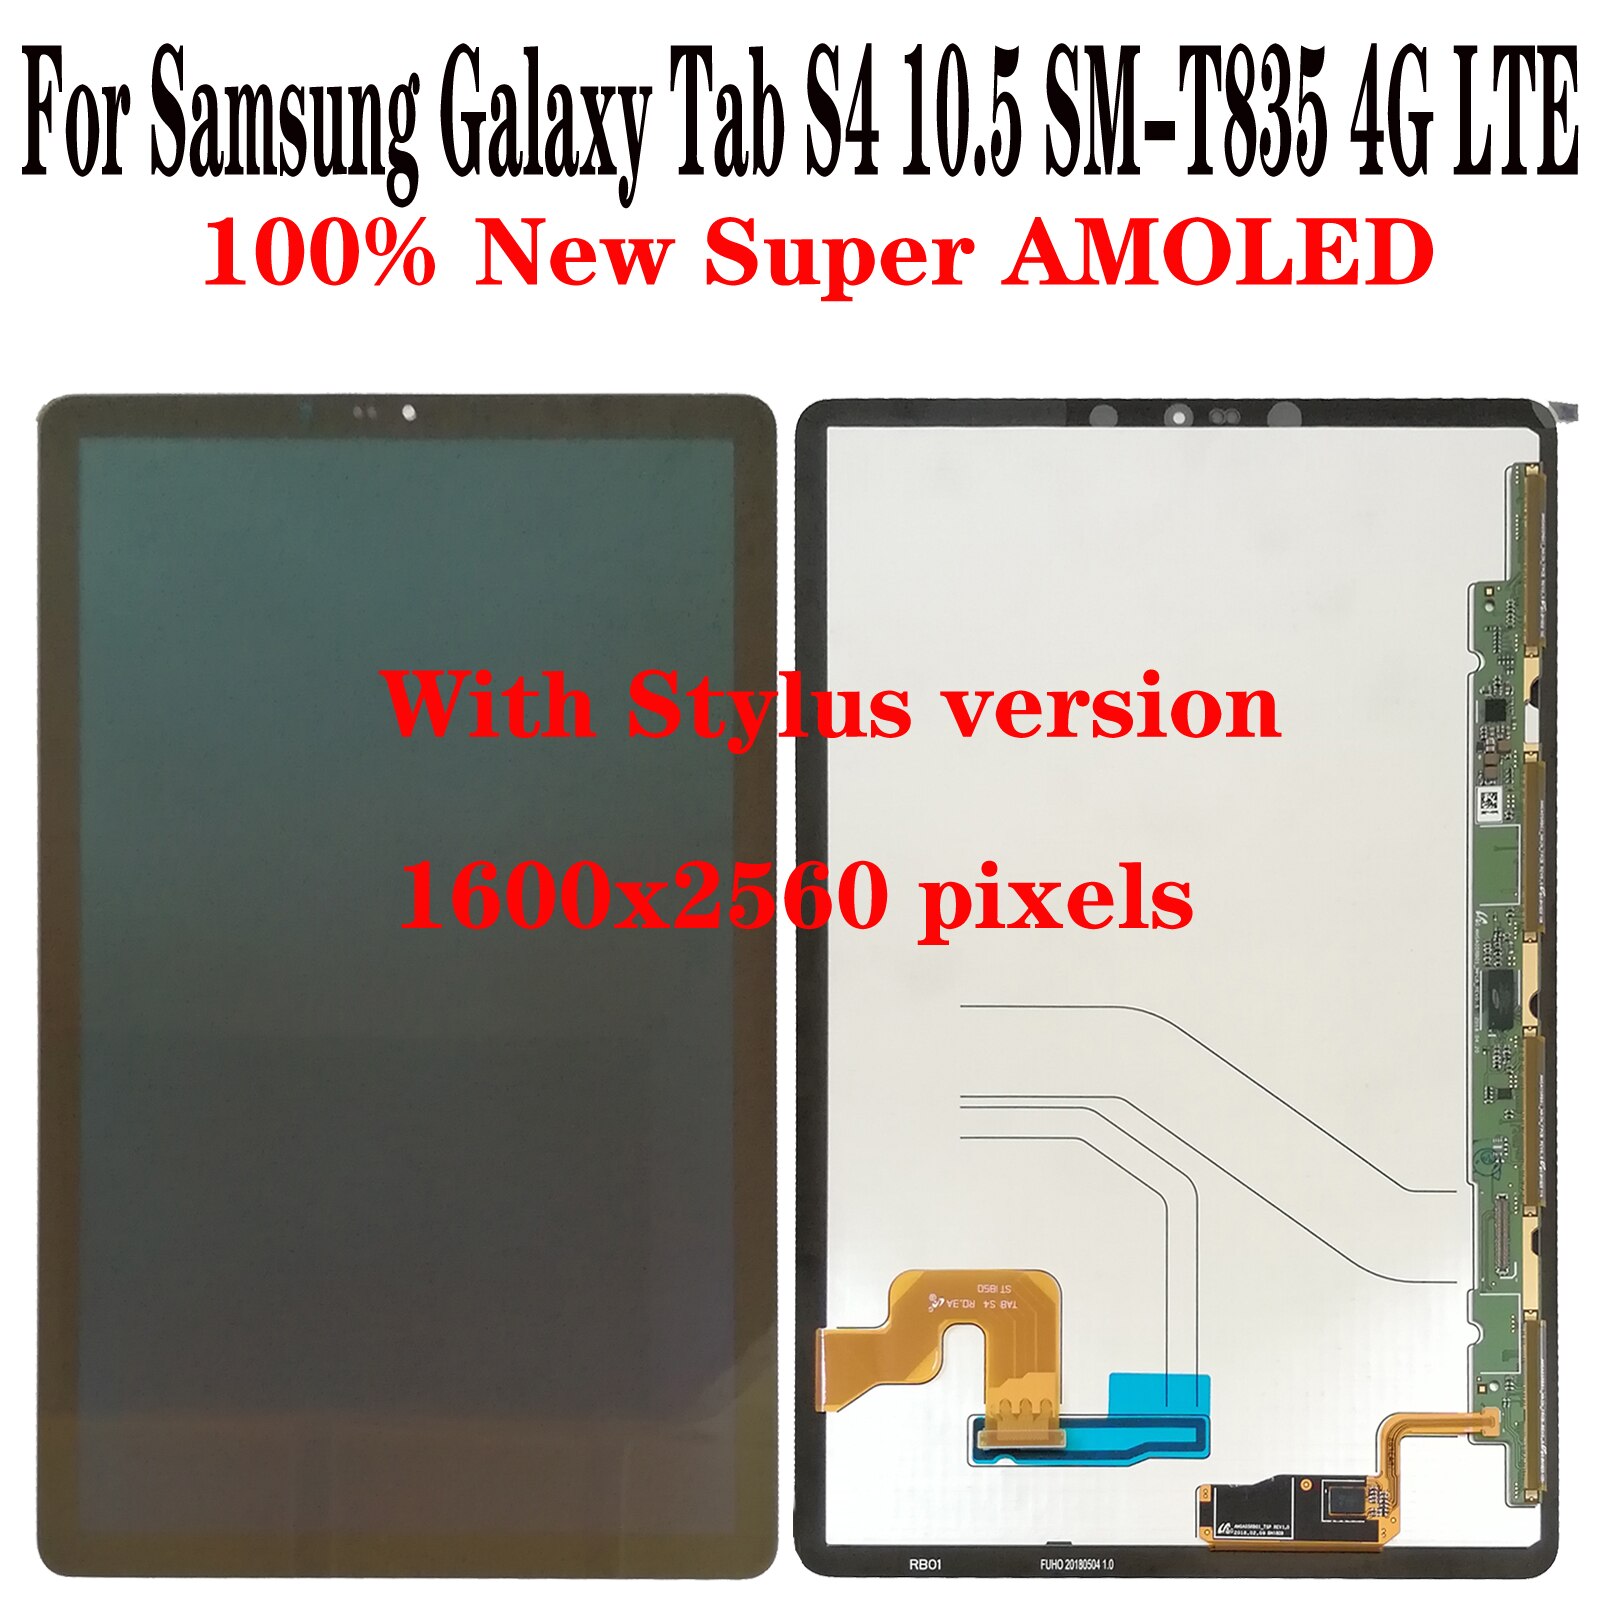 Ｚ   S4 10.5 SM-T835 4G LTE  AMOLED 16..